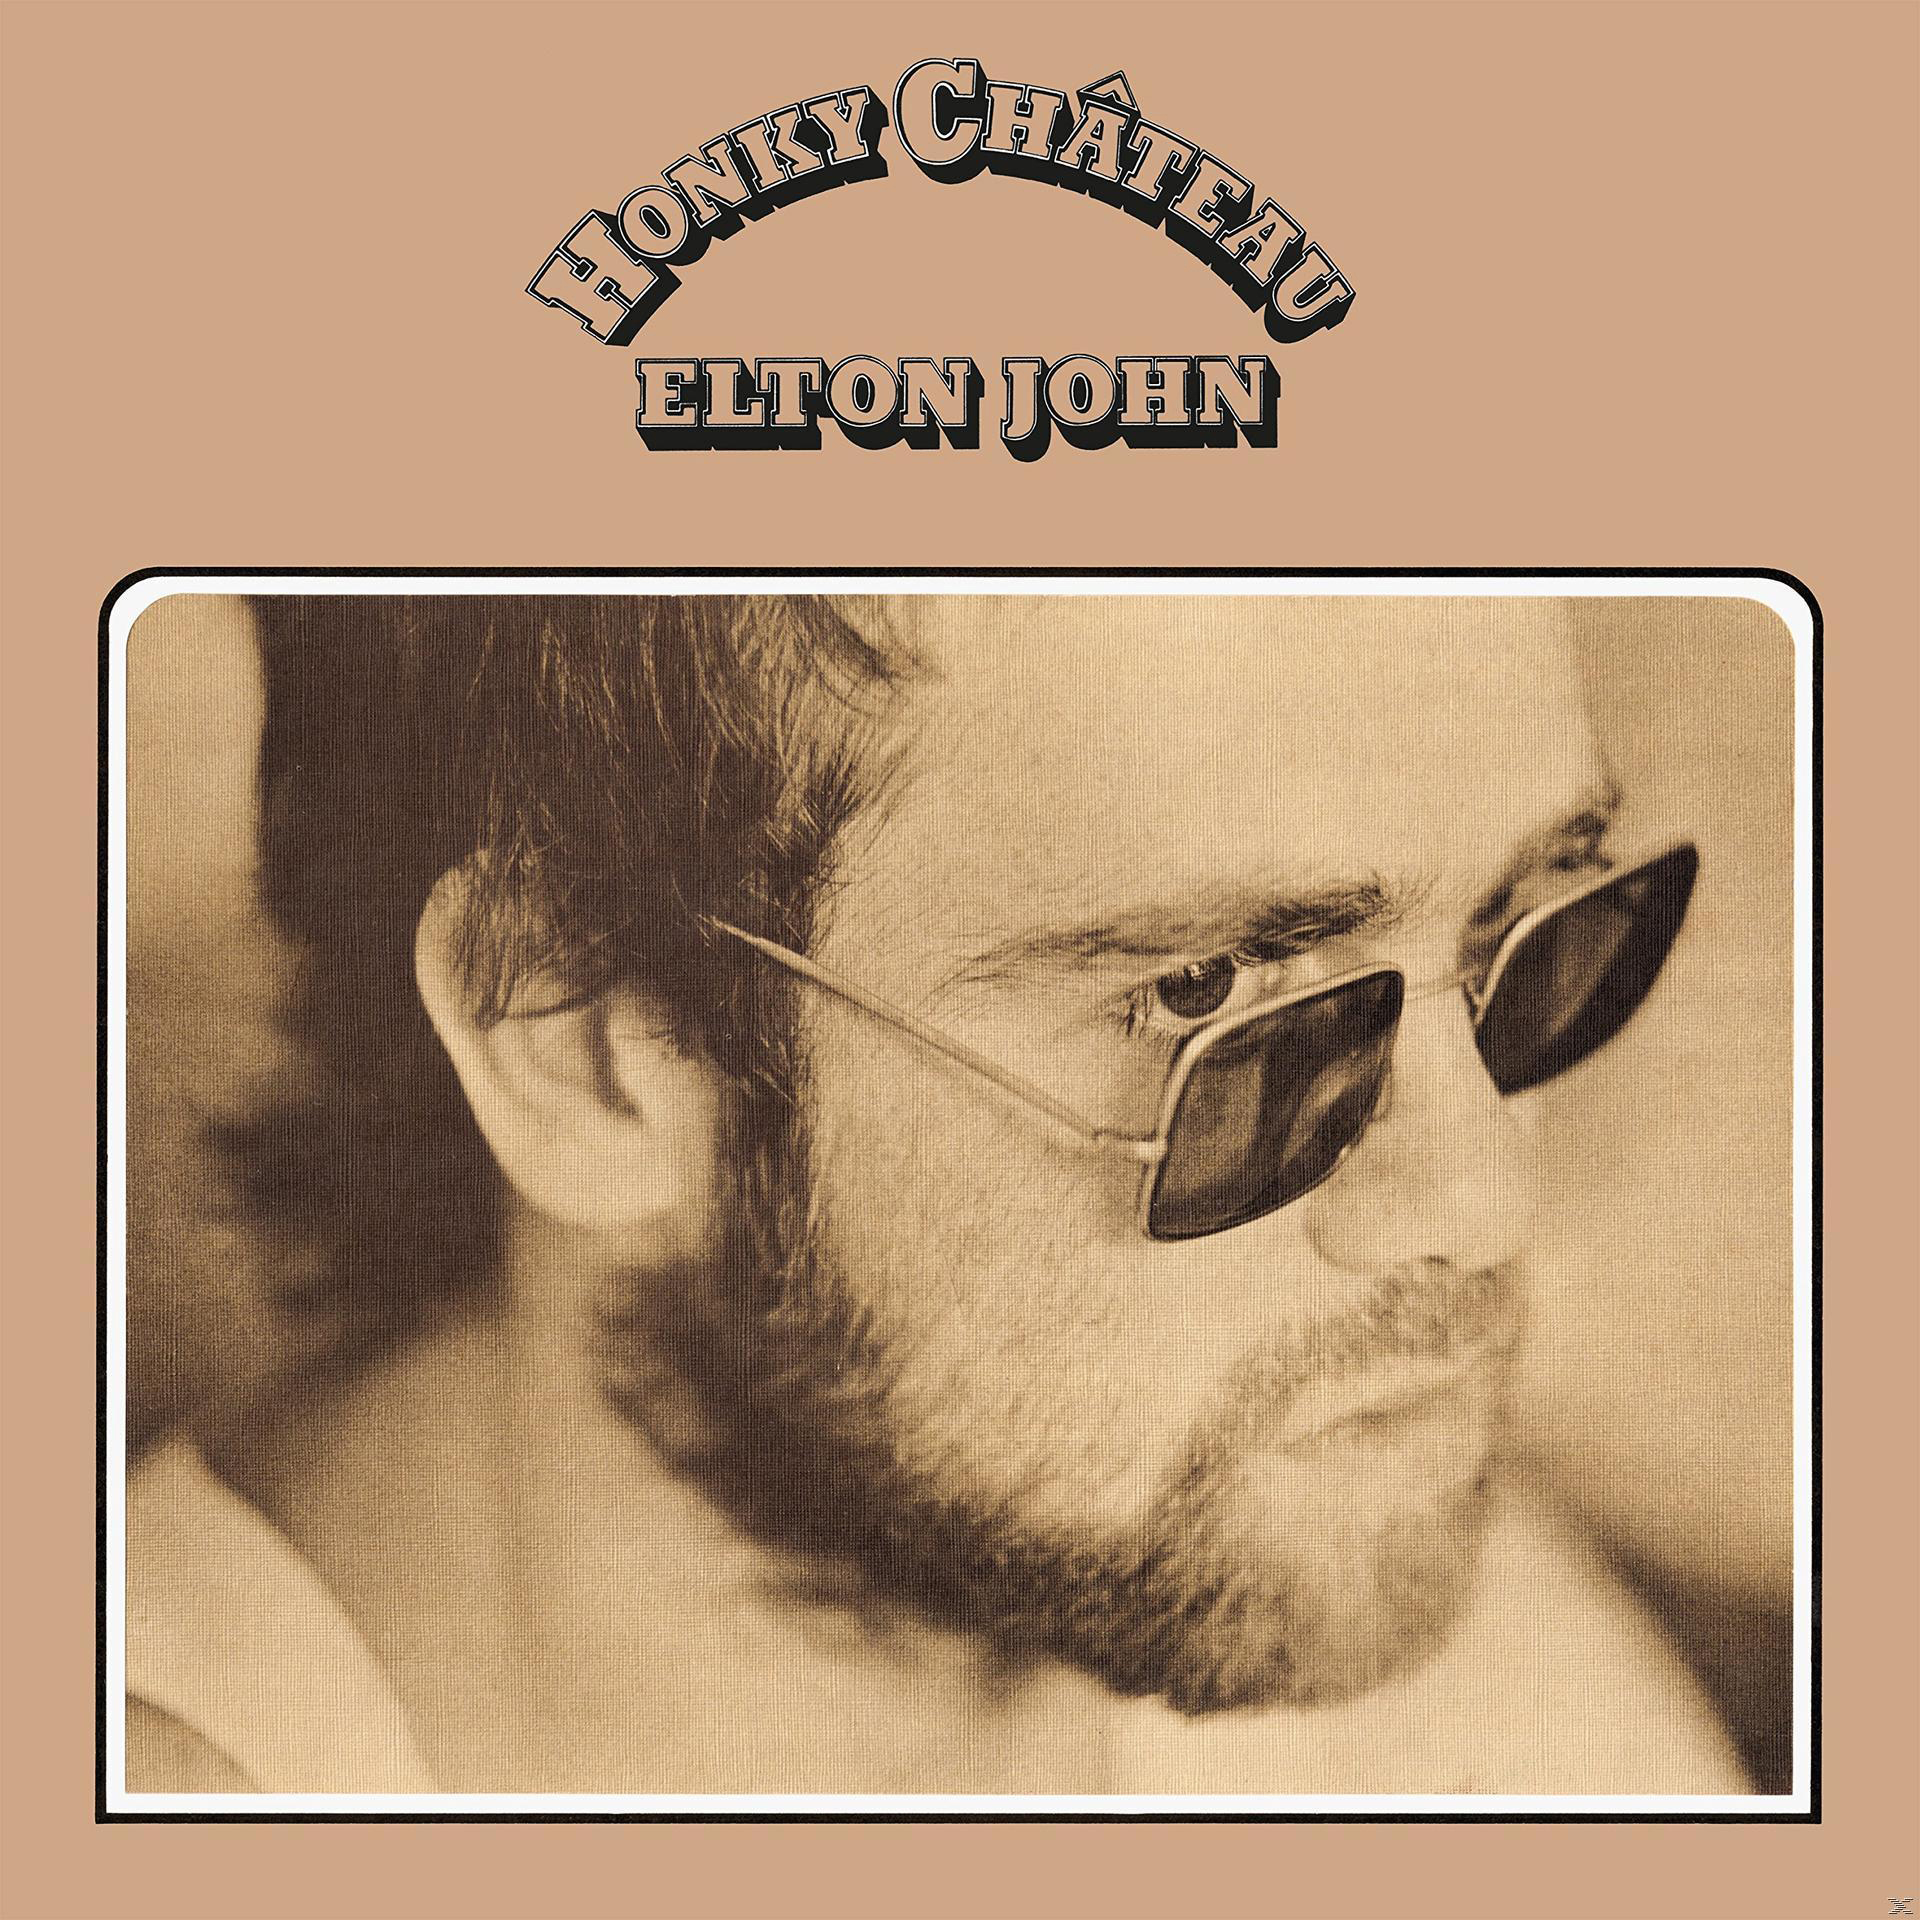 Elton John - Honky (Remastered 2017) (Vinyl) - Chateau